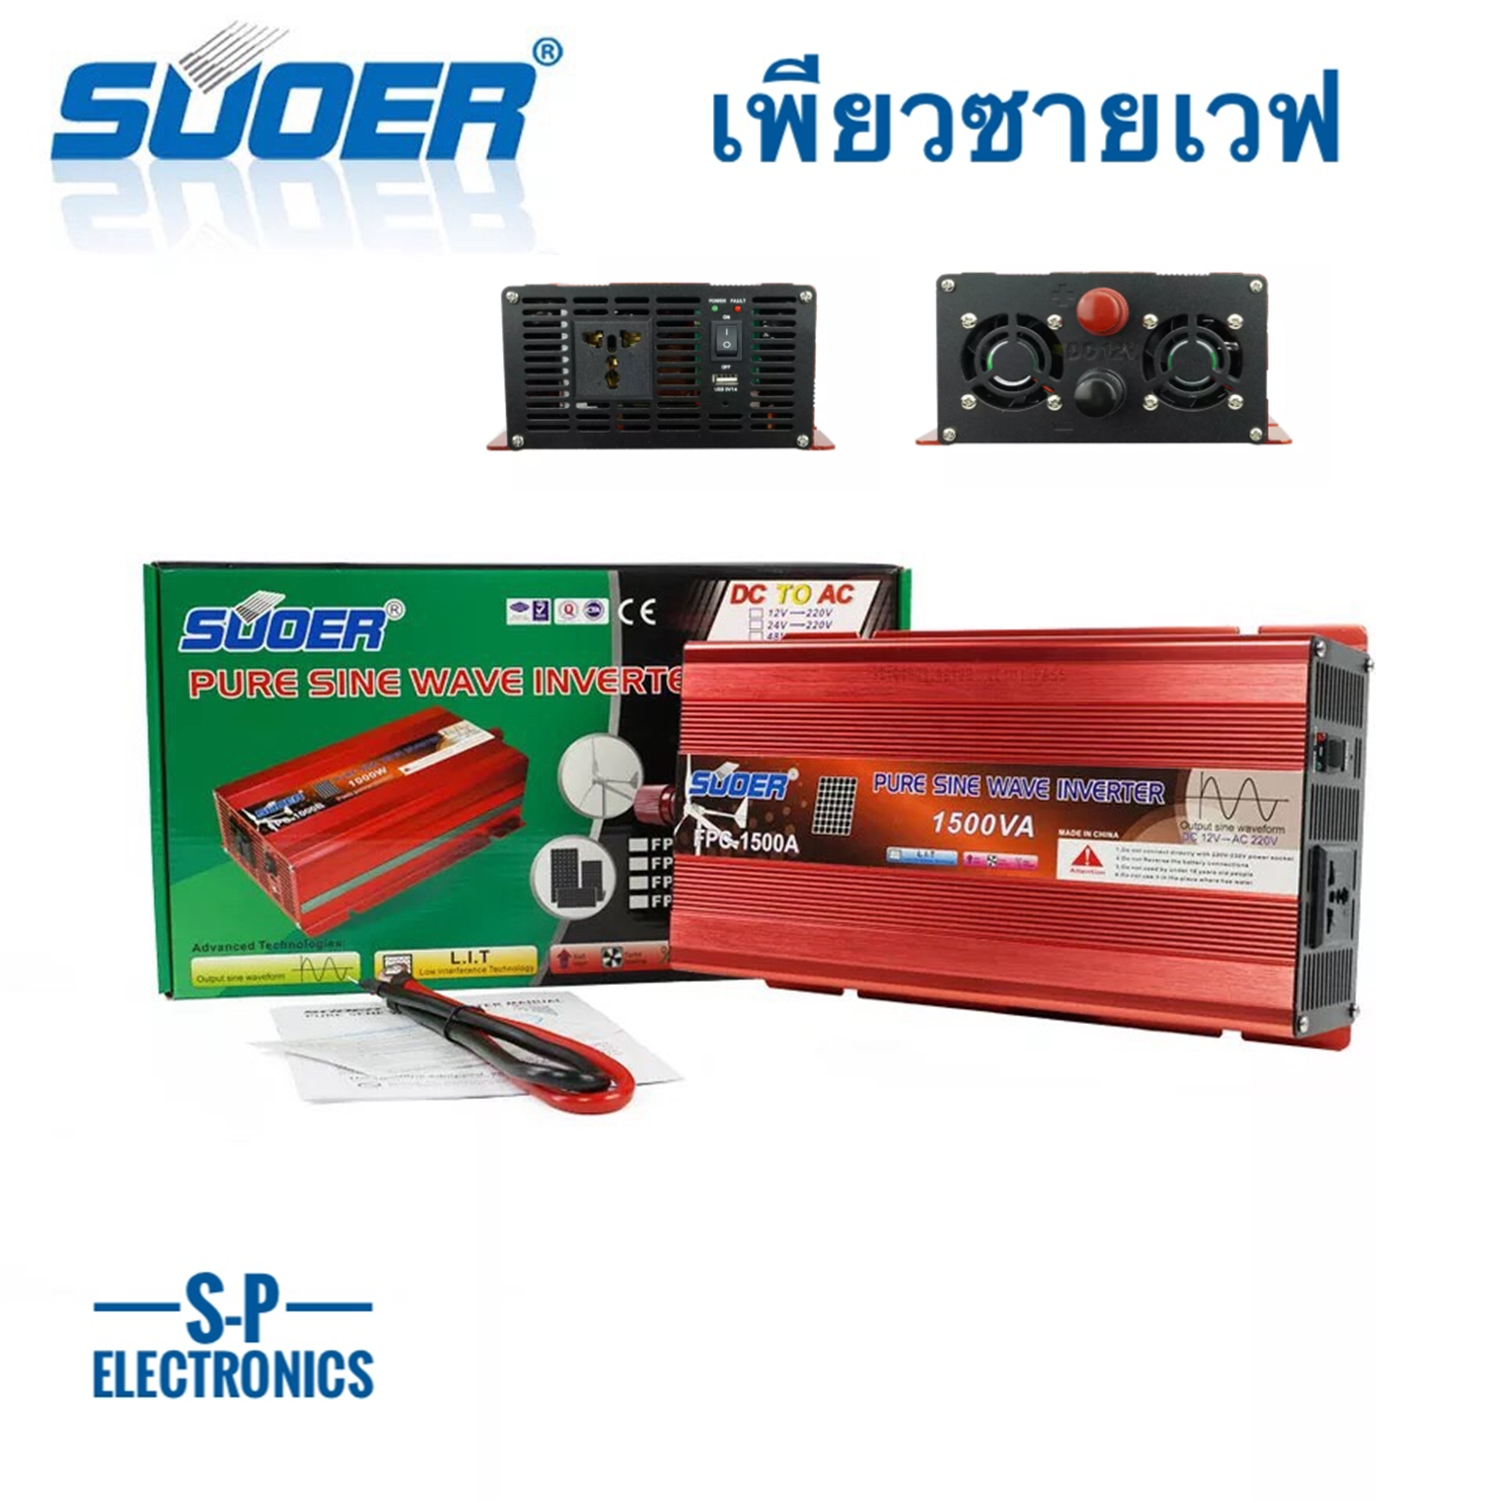 Suoer 12V 1500W อินเวอร์เตอร์ 12V to 220V (FPC-1500A-B) PURE SINE WAVE ชนิดคลื่นเพียวซายเวฟ Power Inverter